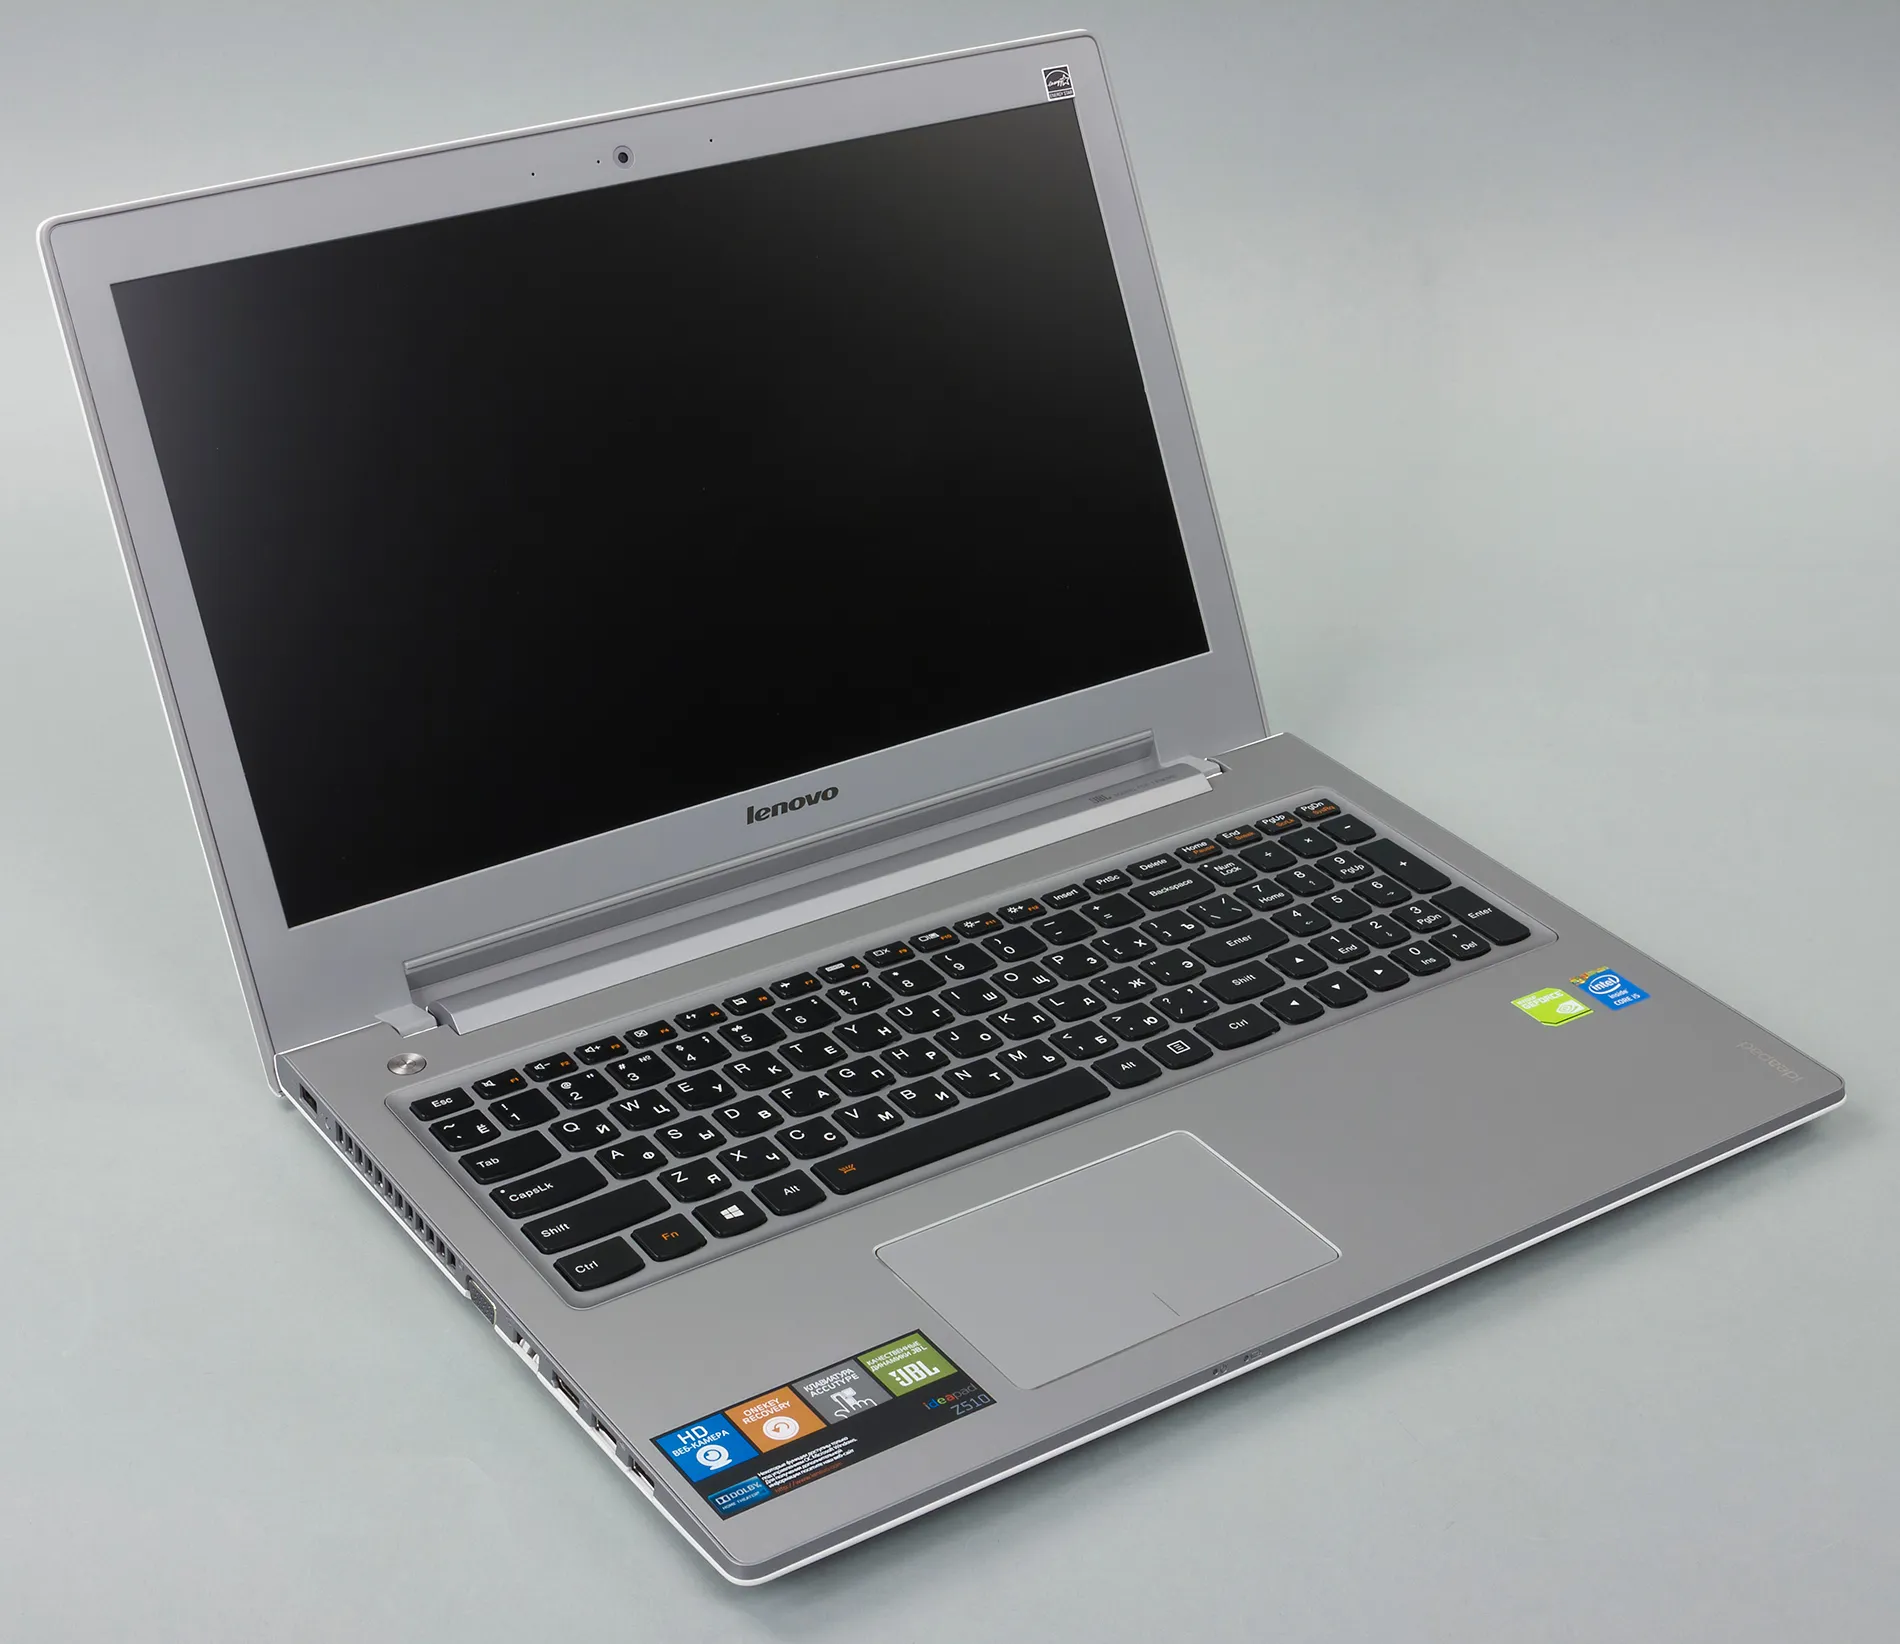 Ноутбук Lenovo Ideapad100 /Celeron3060/2 GB DDR3/500GB HDD /15.6" HD LED/UMA/DVD/ RUS (нормальная клав-ра)#4